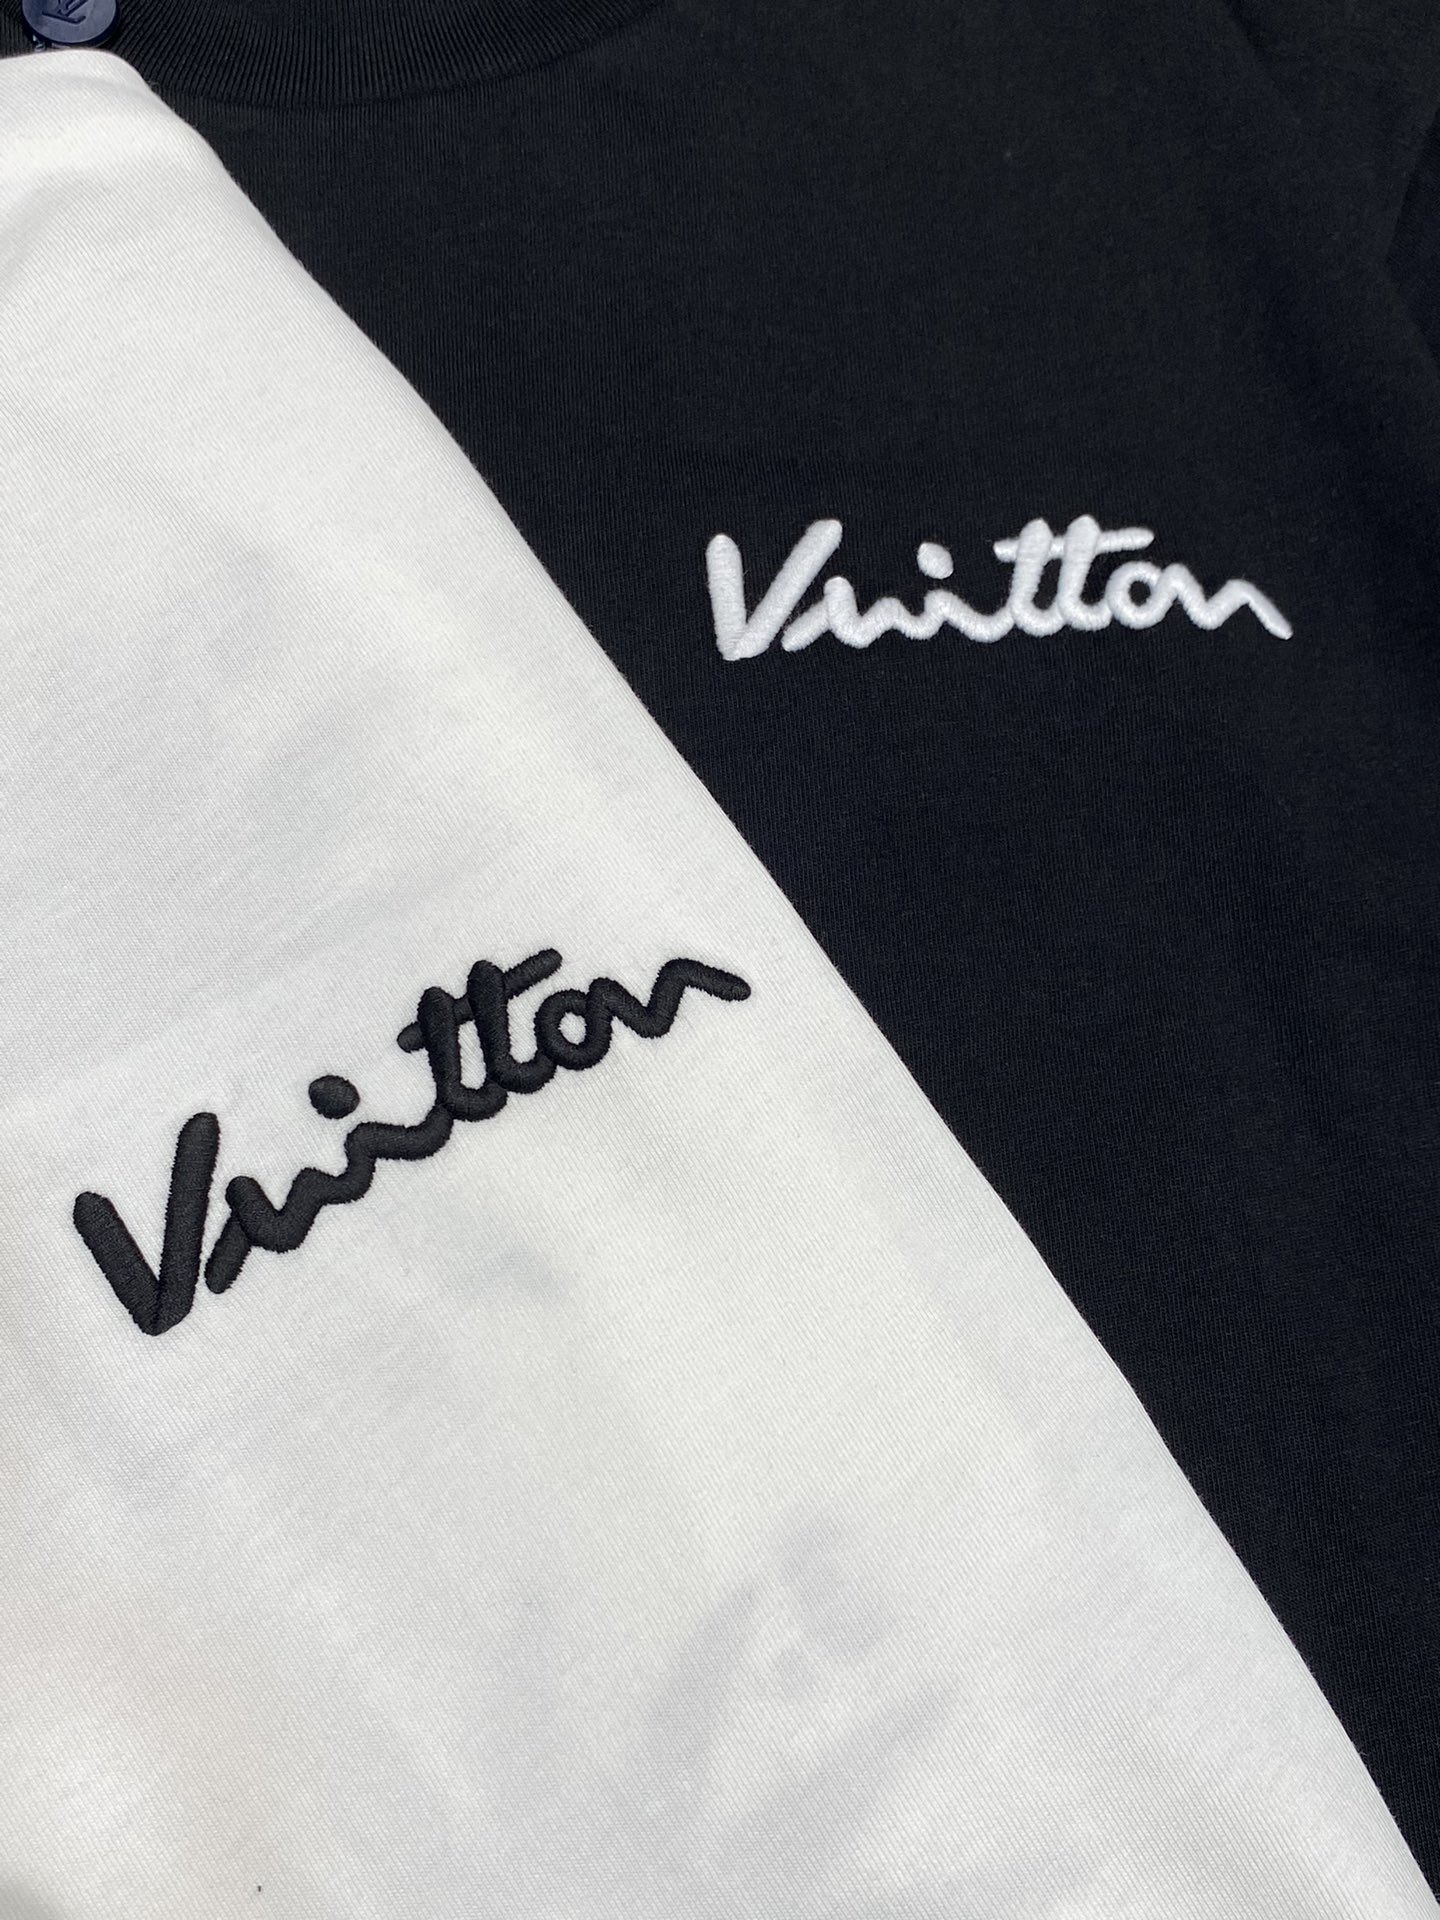 Where can I buy
 Louis Vuitton Clothing T-Shirt Men Fashion Short Sleeve